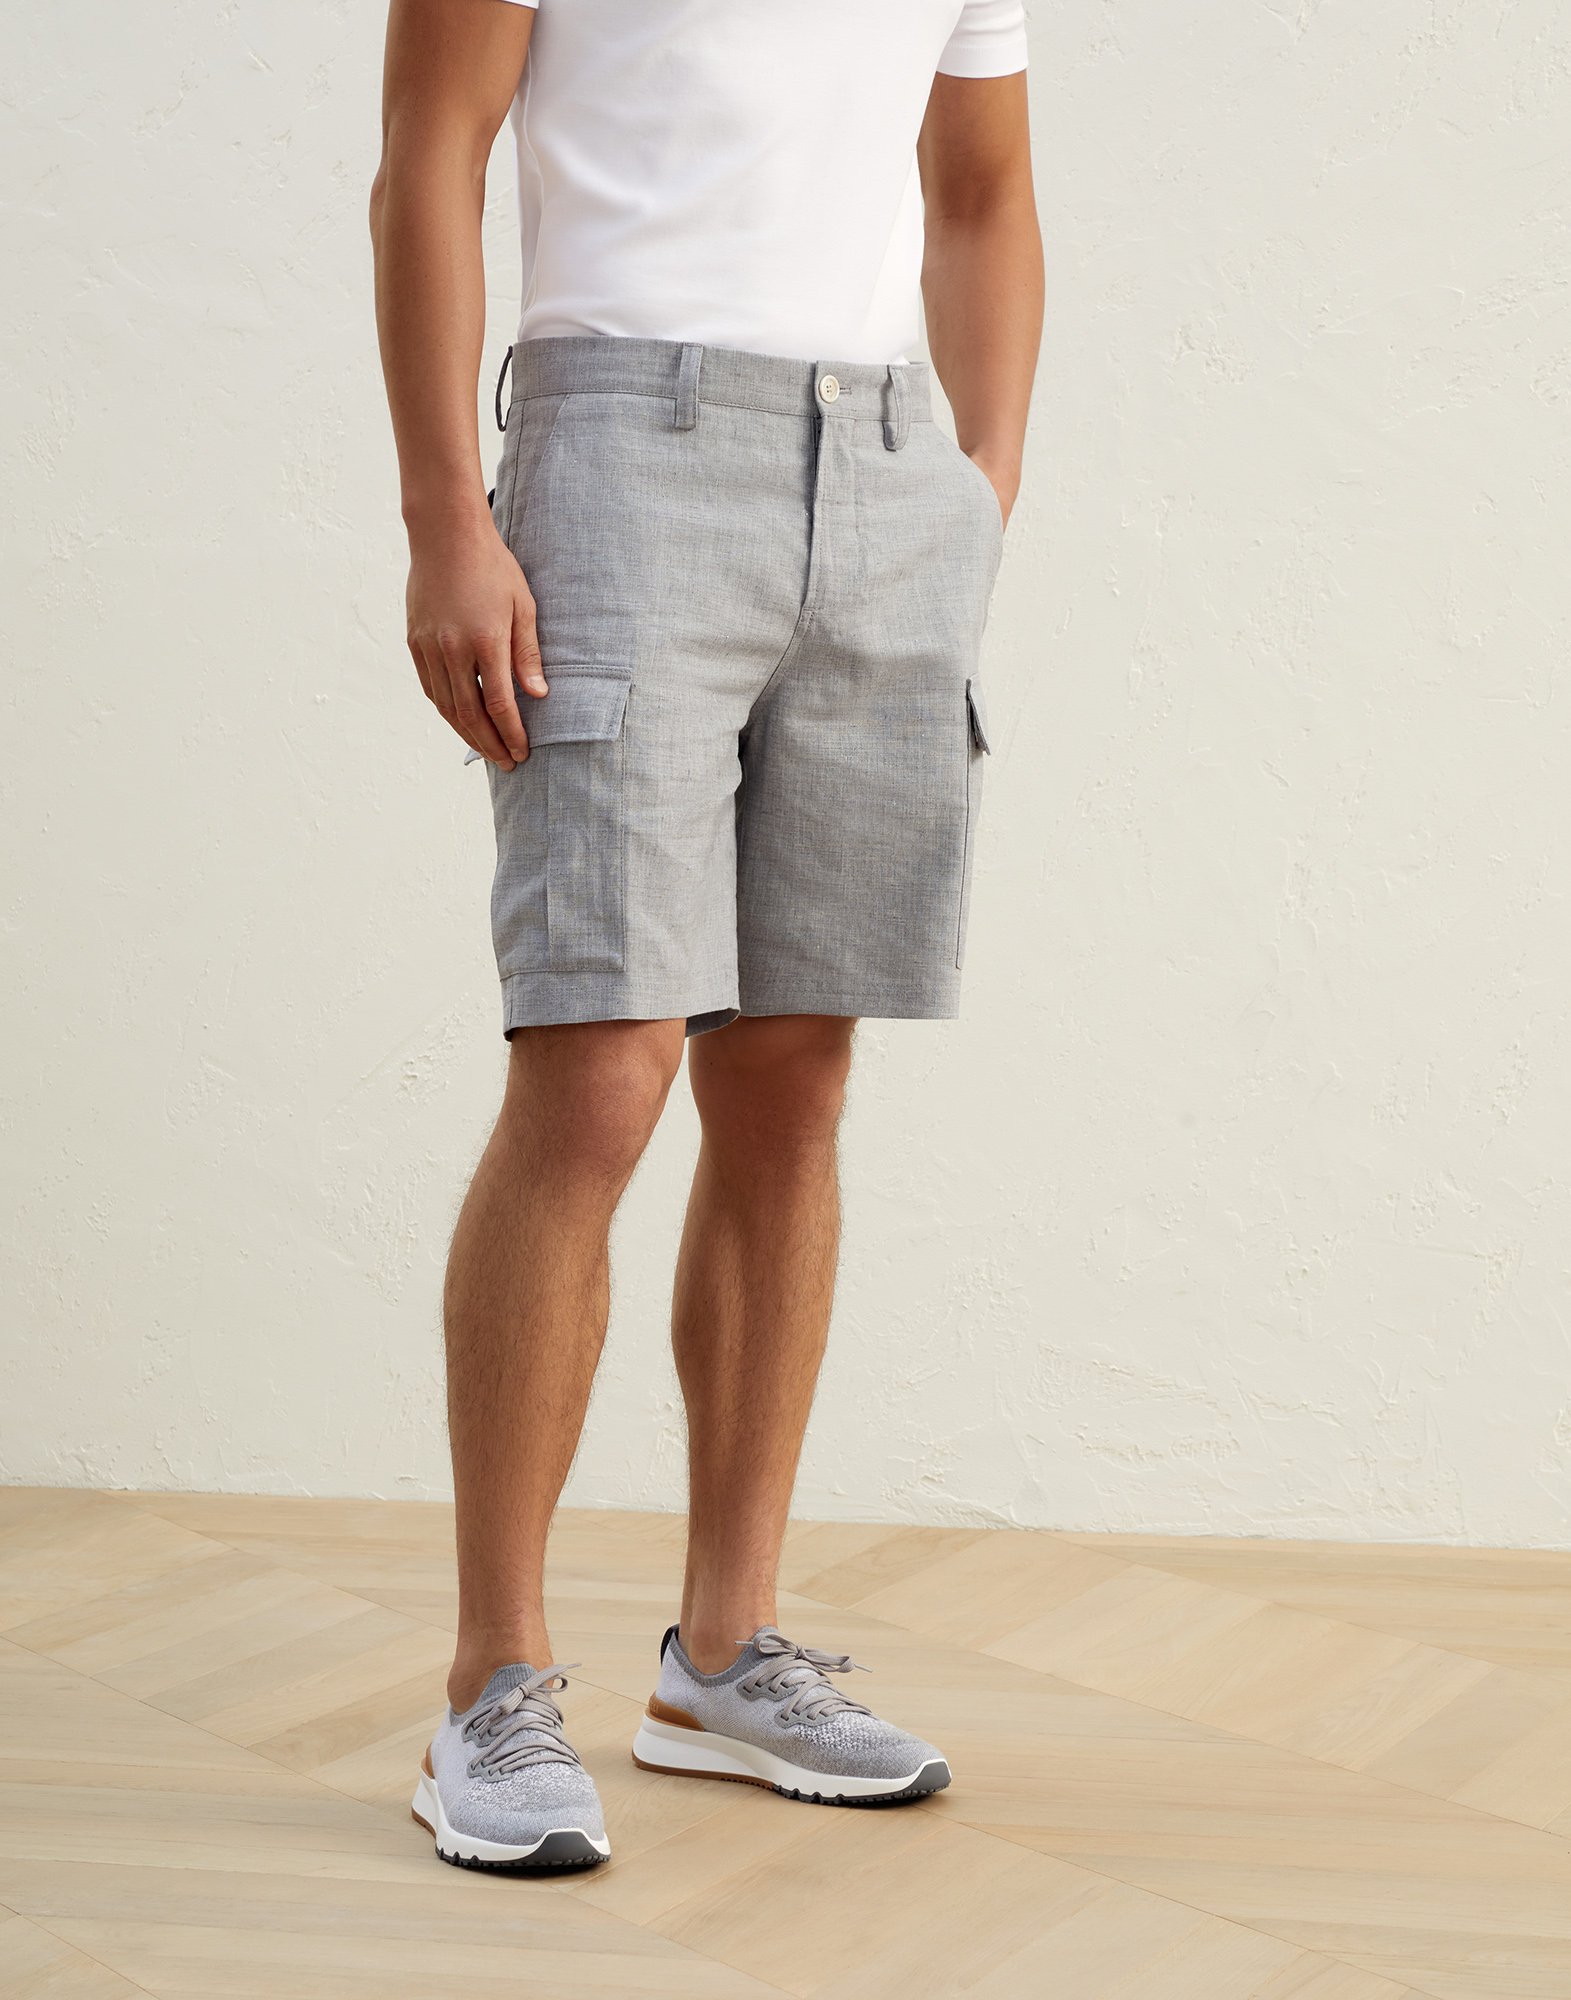 Bermuda shorts with cargo pockets